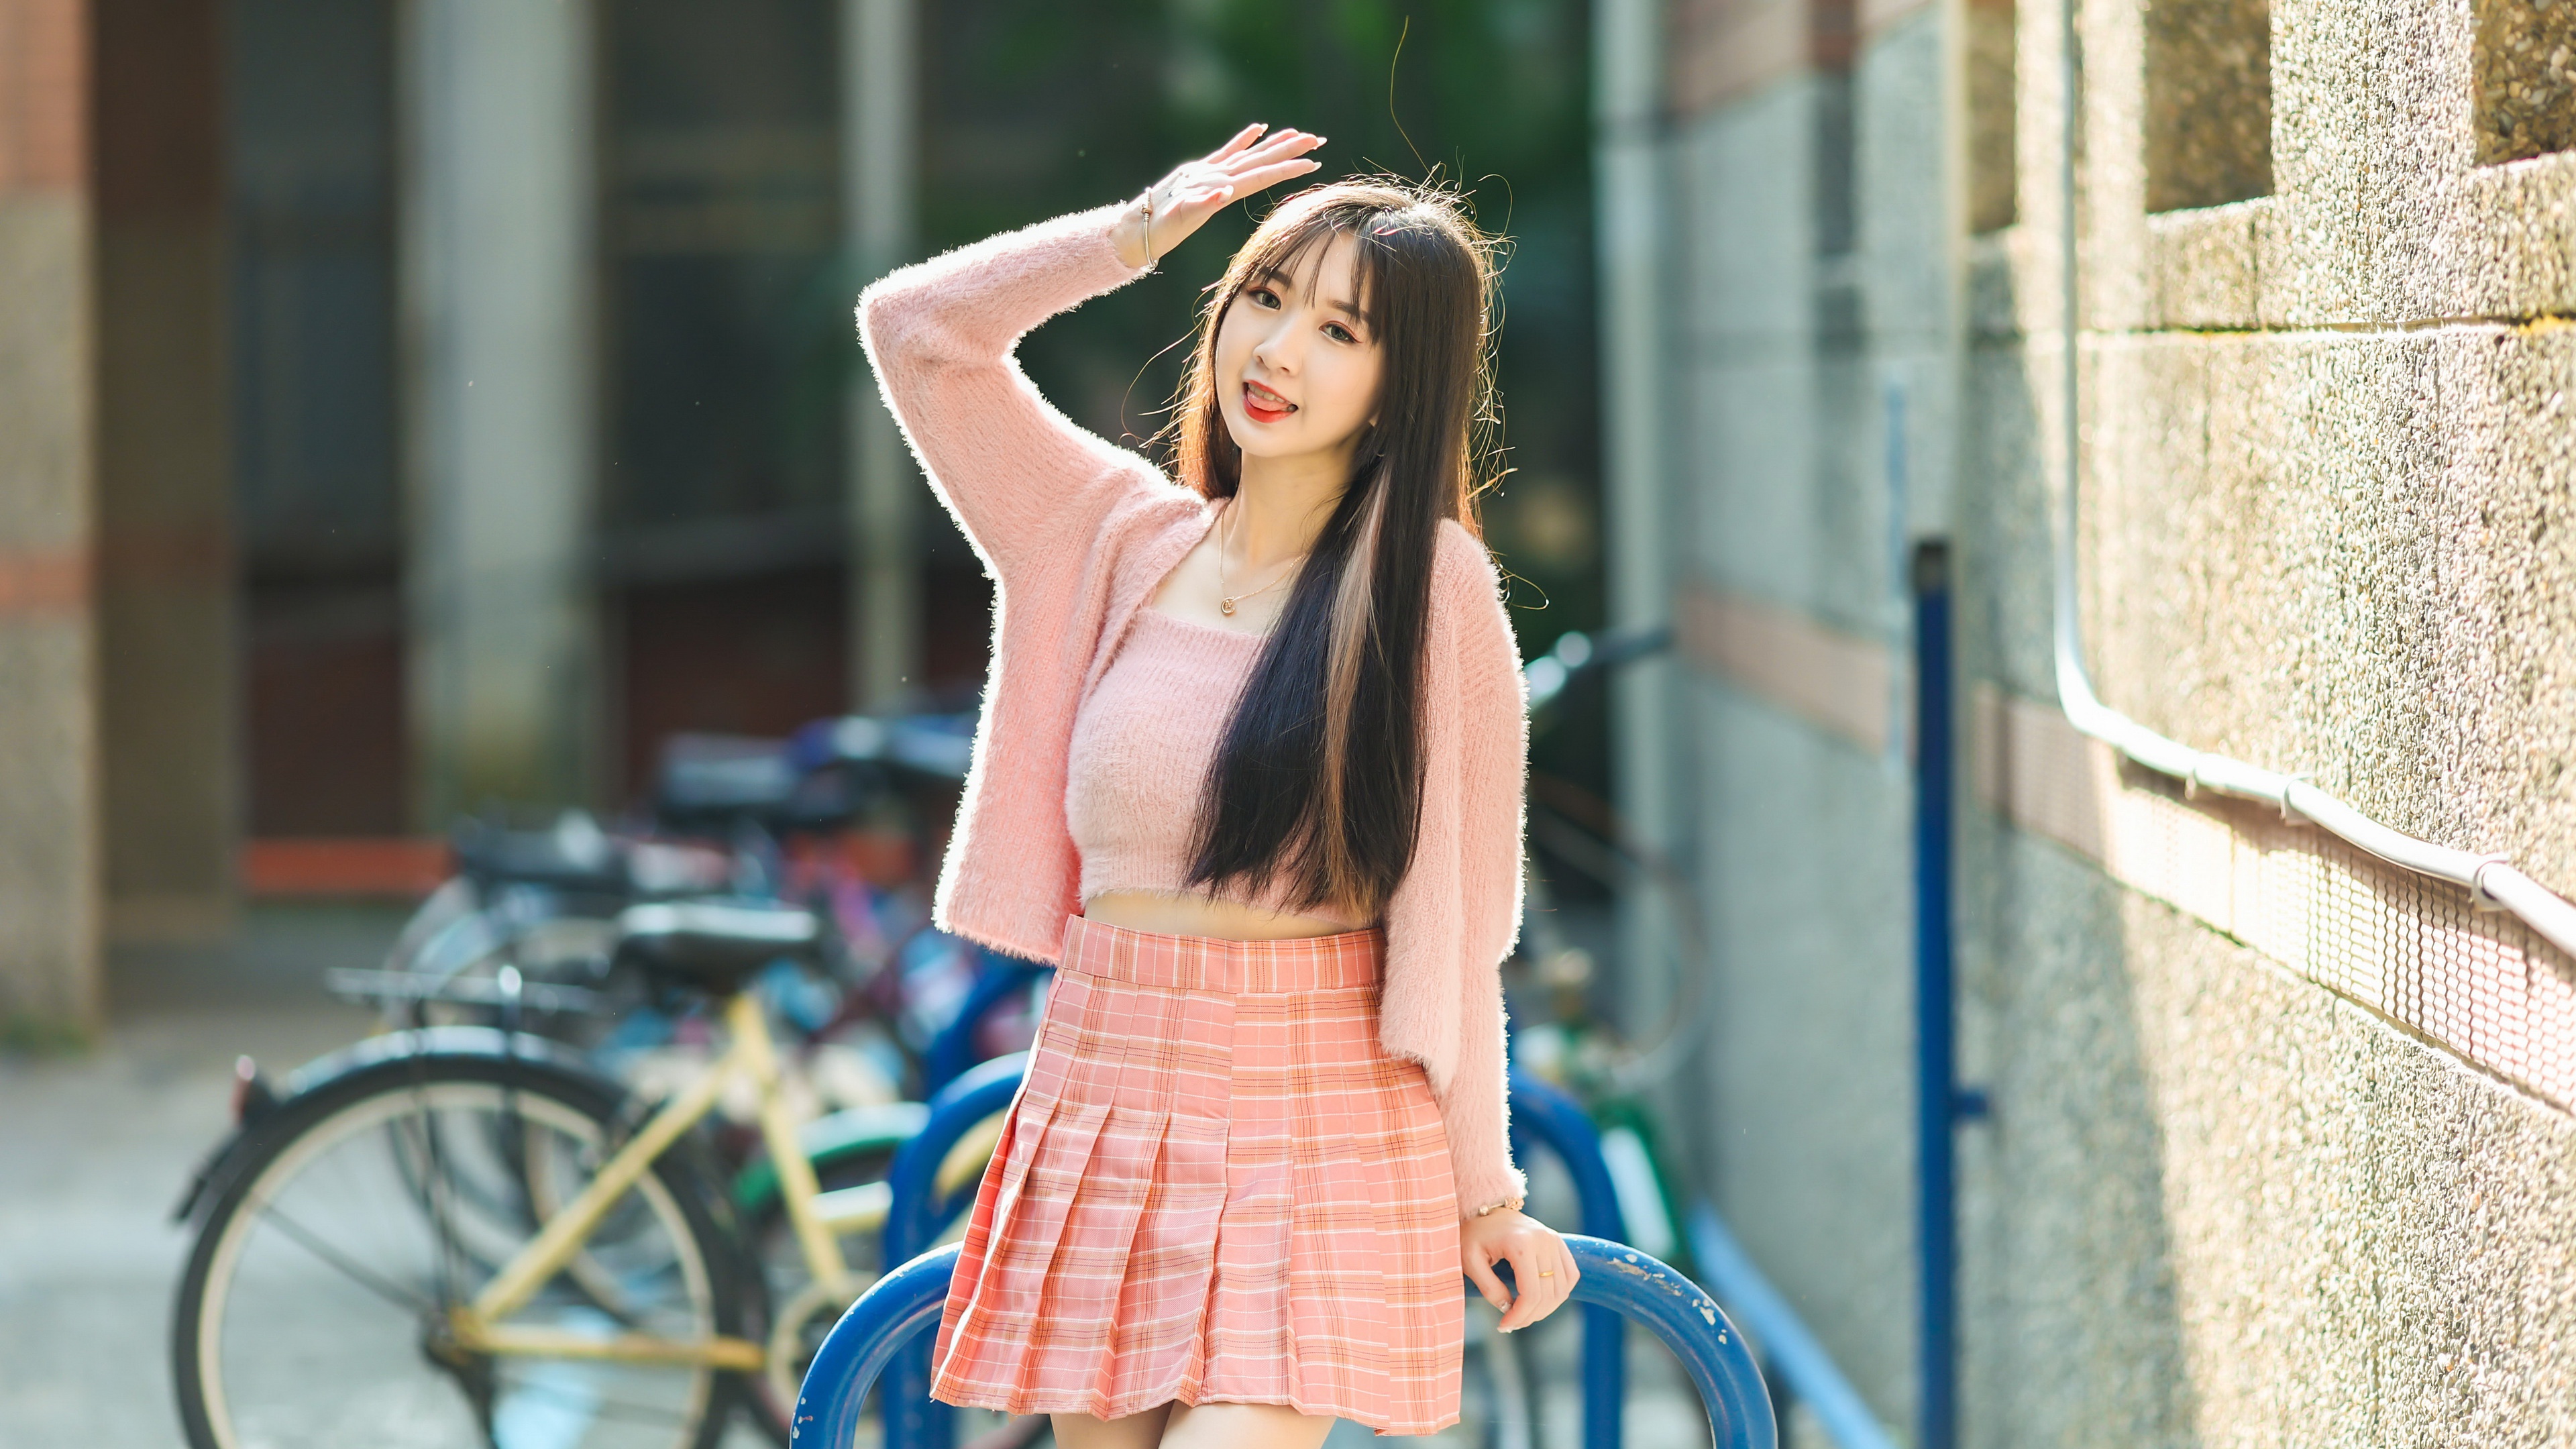 Asian Women Model Bicycle Women Outdoors Urban Skirt Long Hair Brunette Tongues Tongue Out Pink Clot 3840x2160